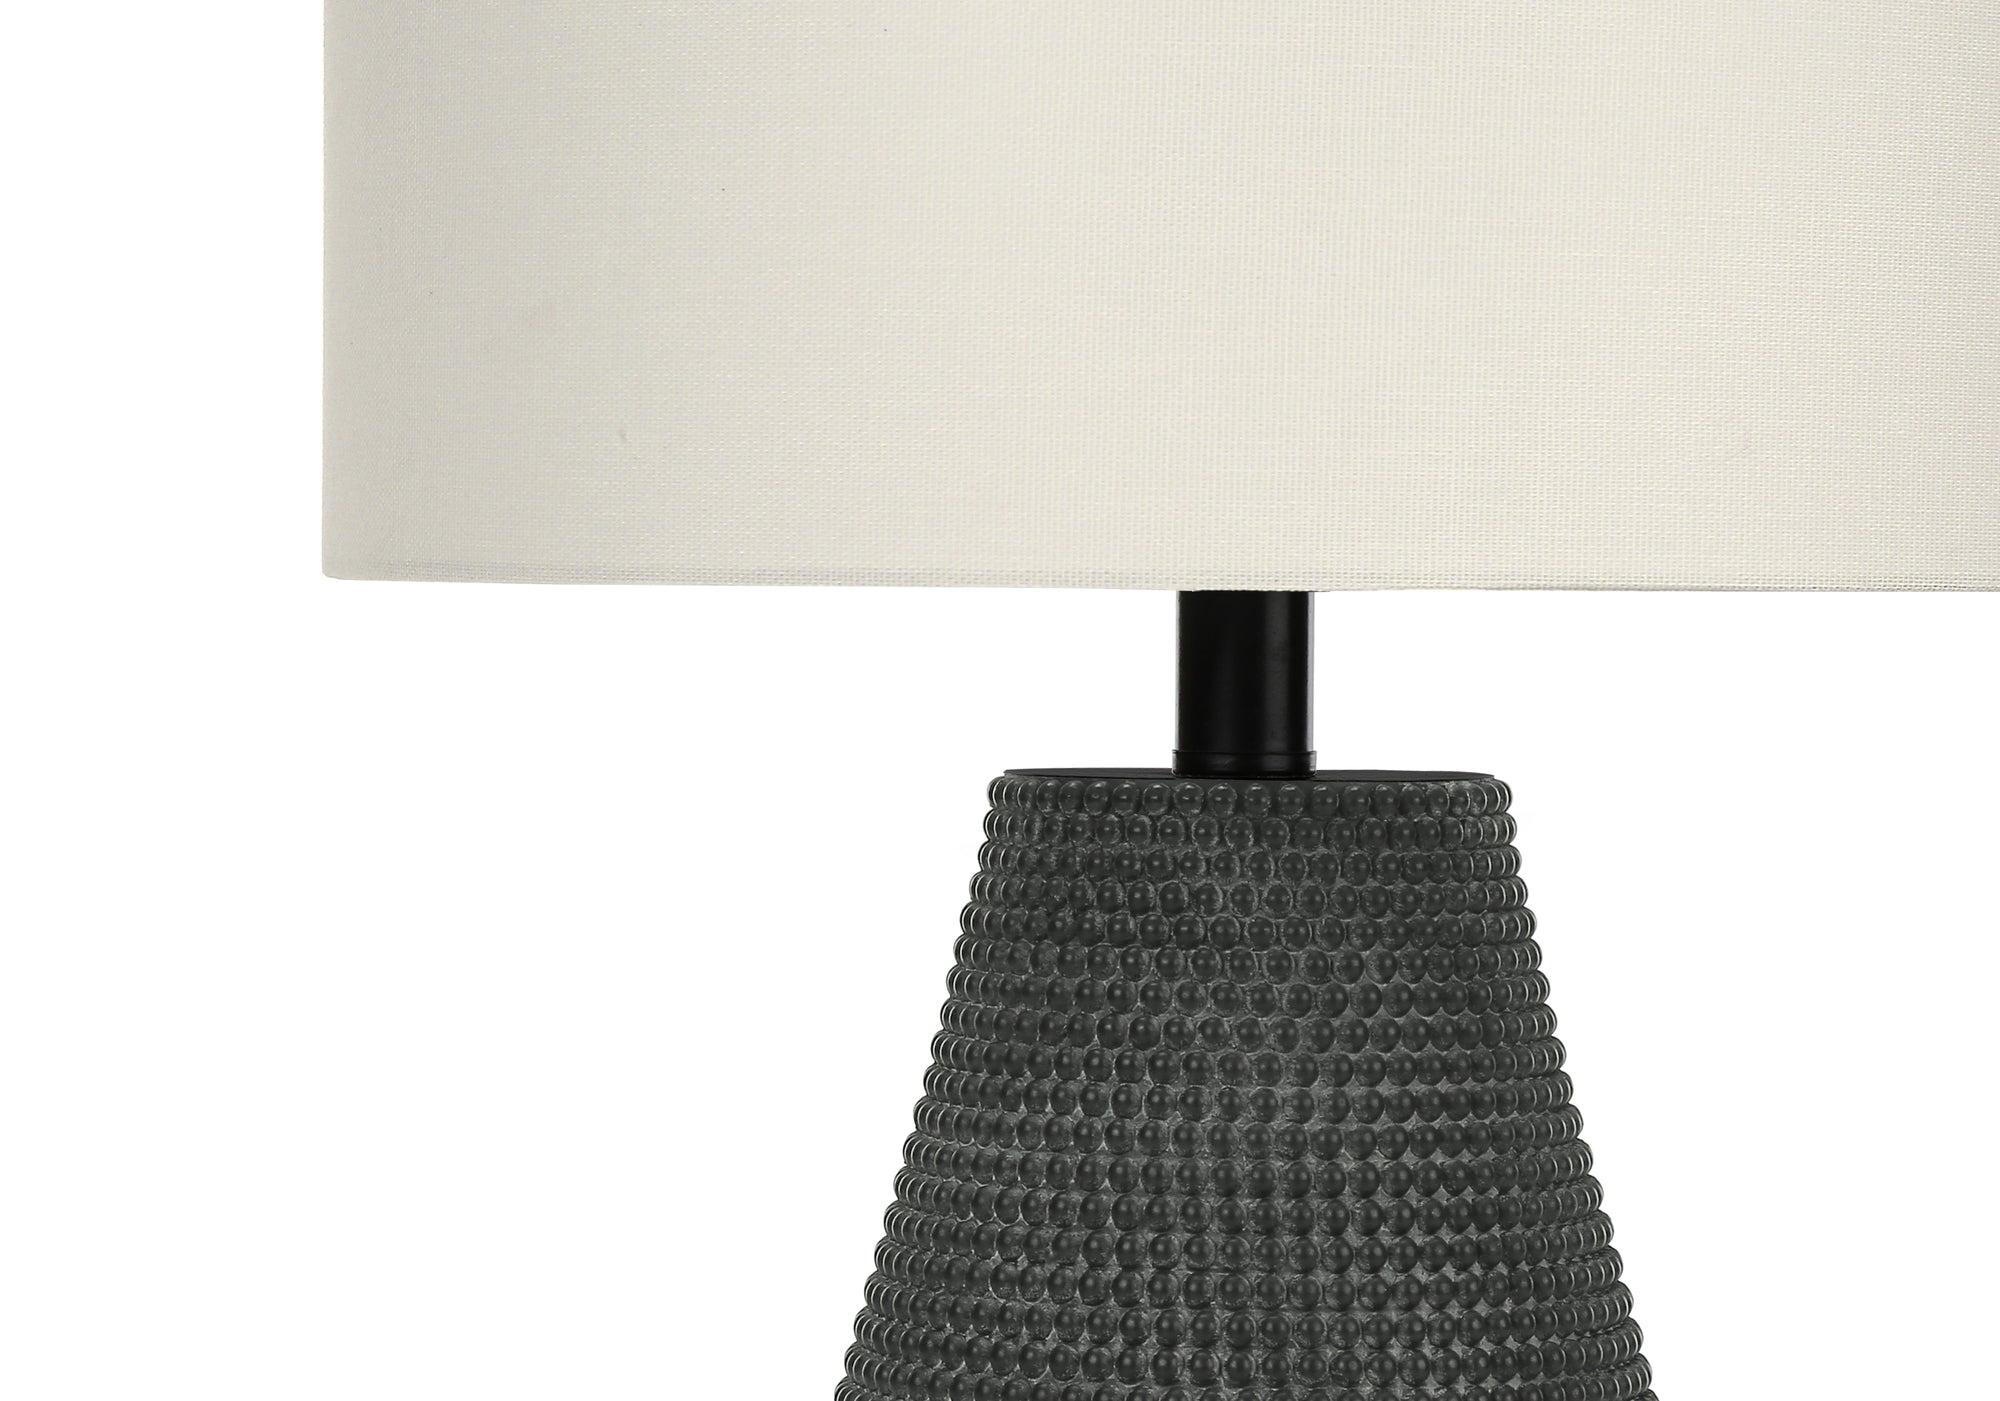 MN-319655    Lighting, 24"H, Table Lamp, Black Resin, Ivory / Cream Shade, Contemporary